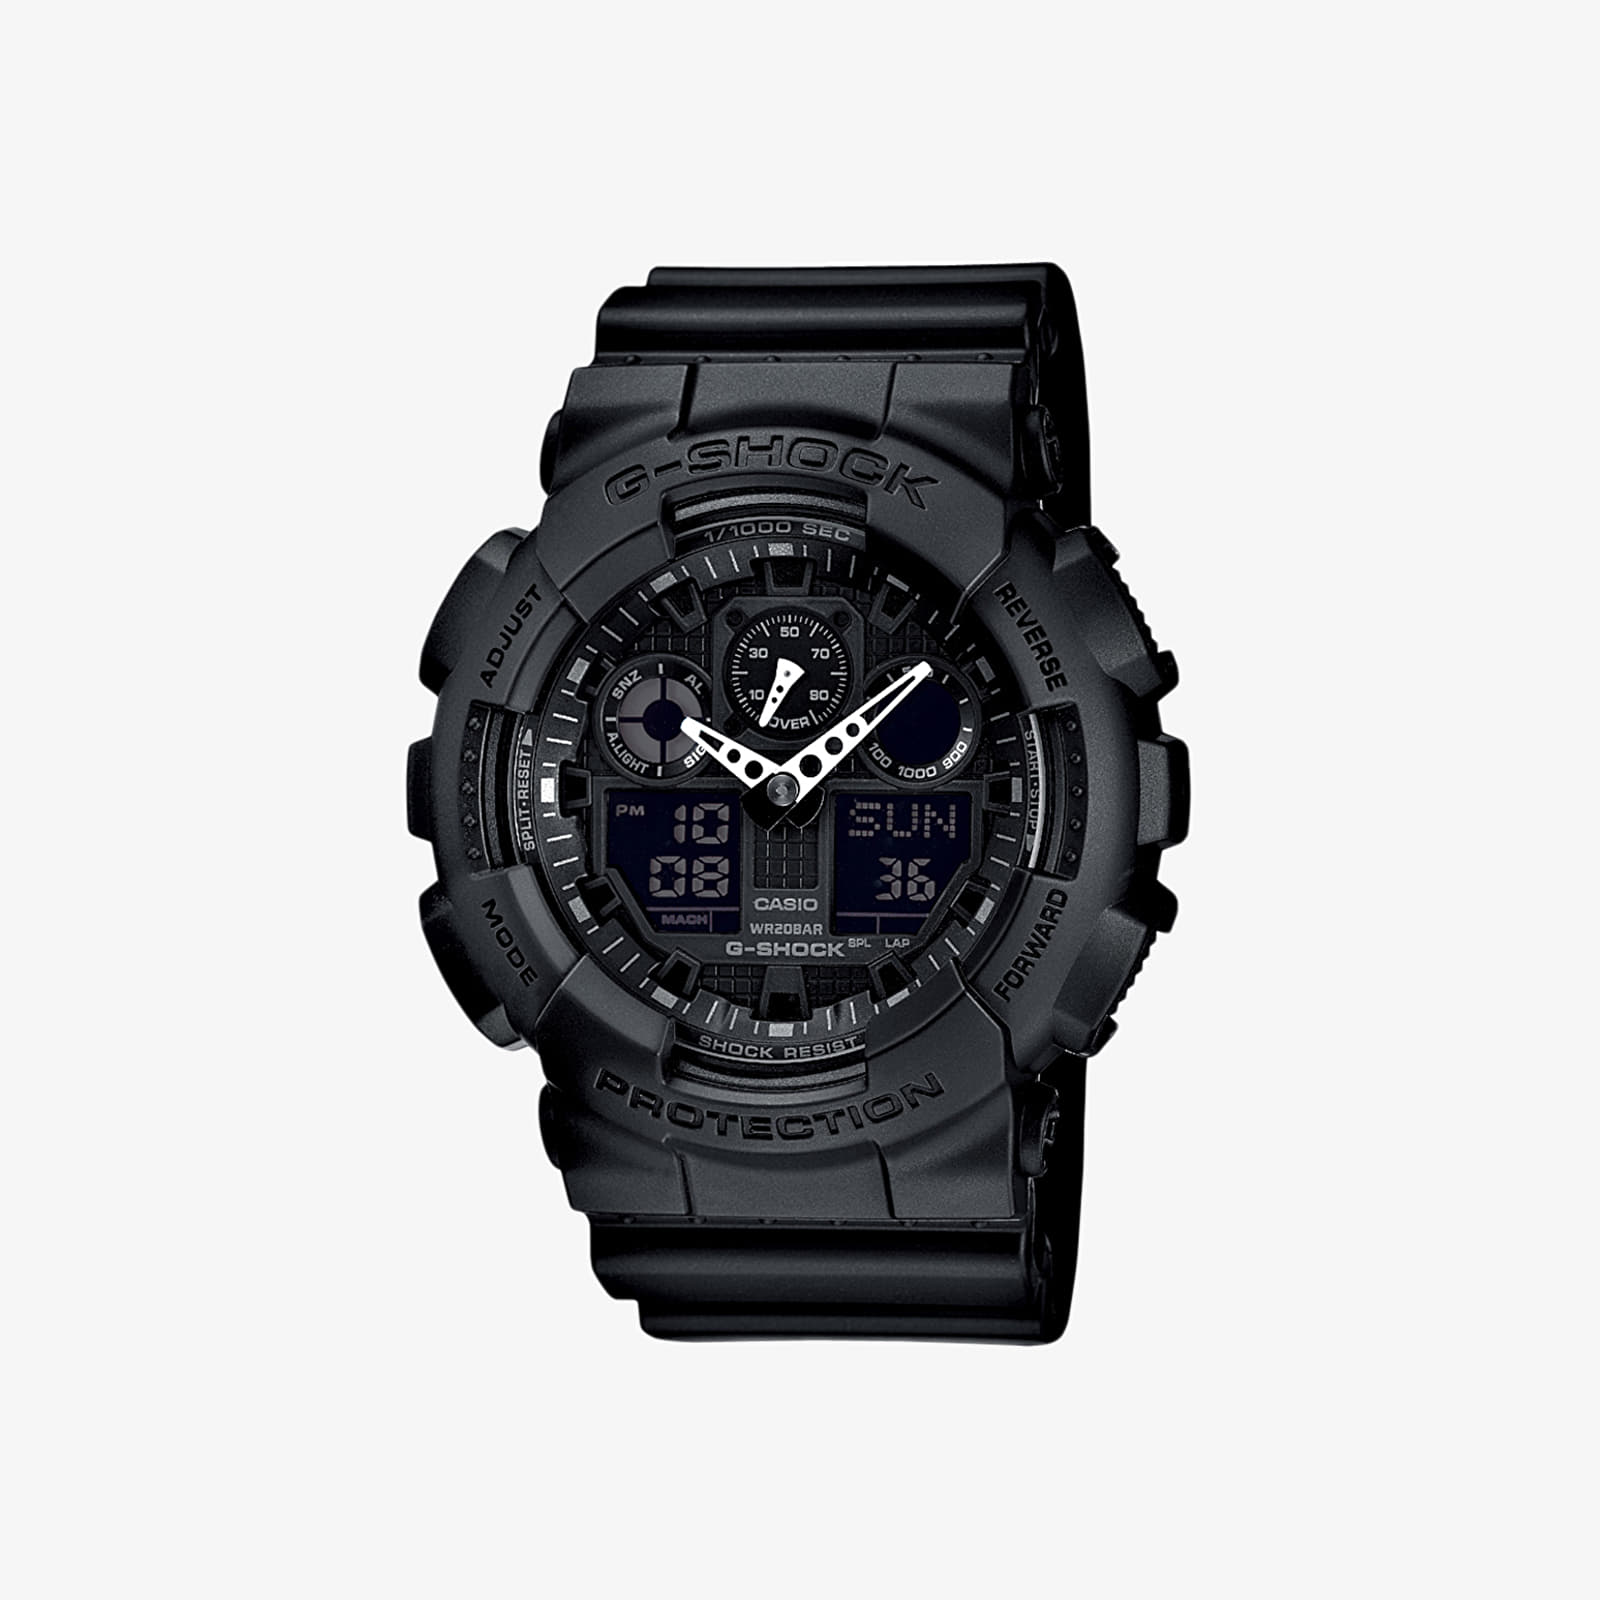 Orologi Casio G-Shock GA-100-1A1ER Black